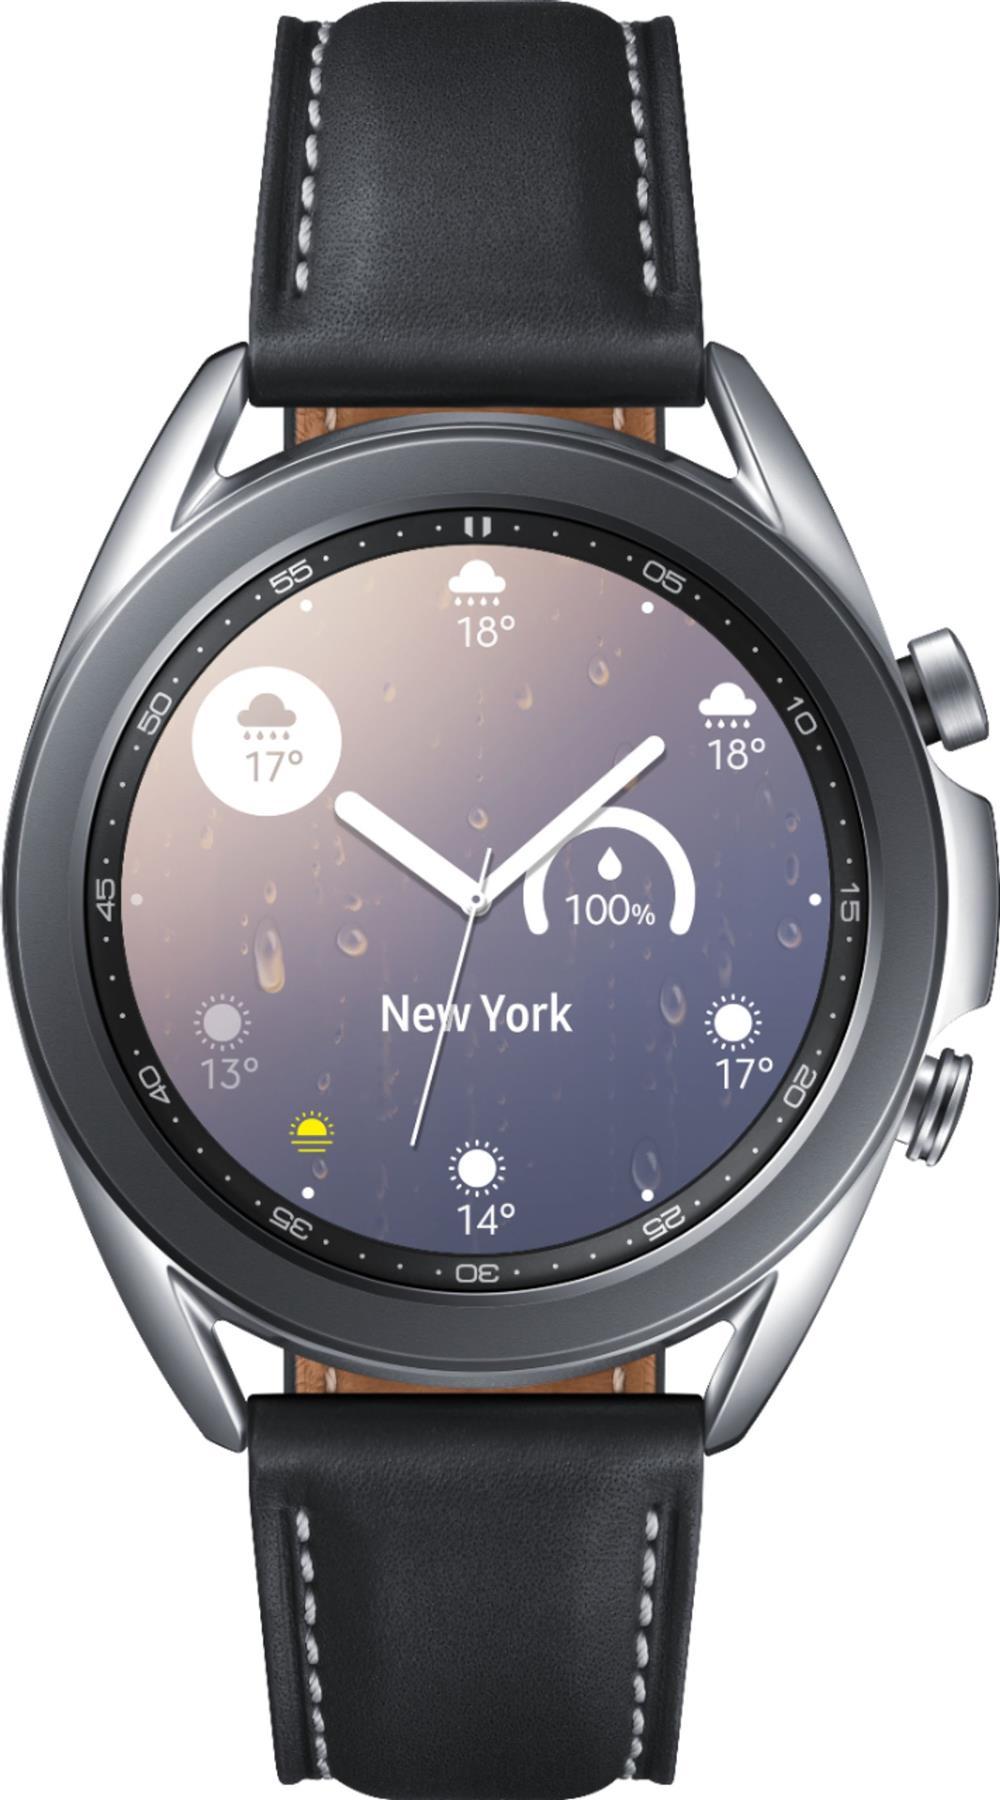 Samsung Galaxy Watch 3 Mystic Silver 41mm (4G) Refurbished Excellent